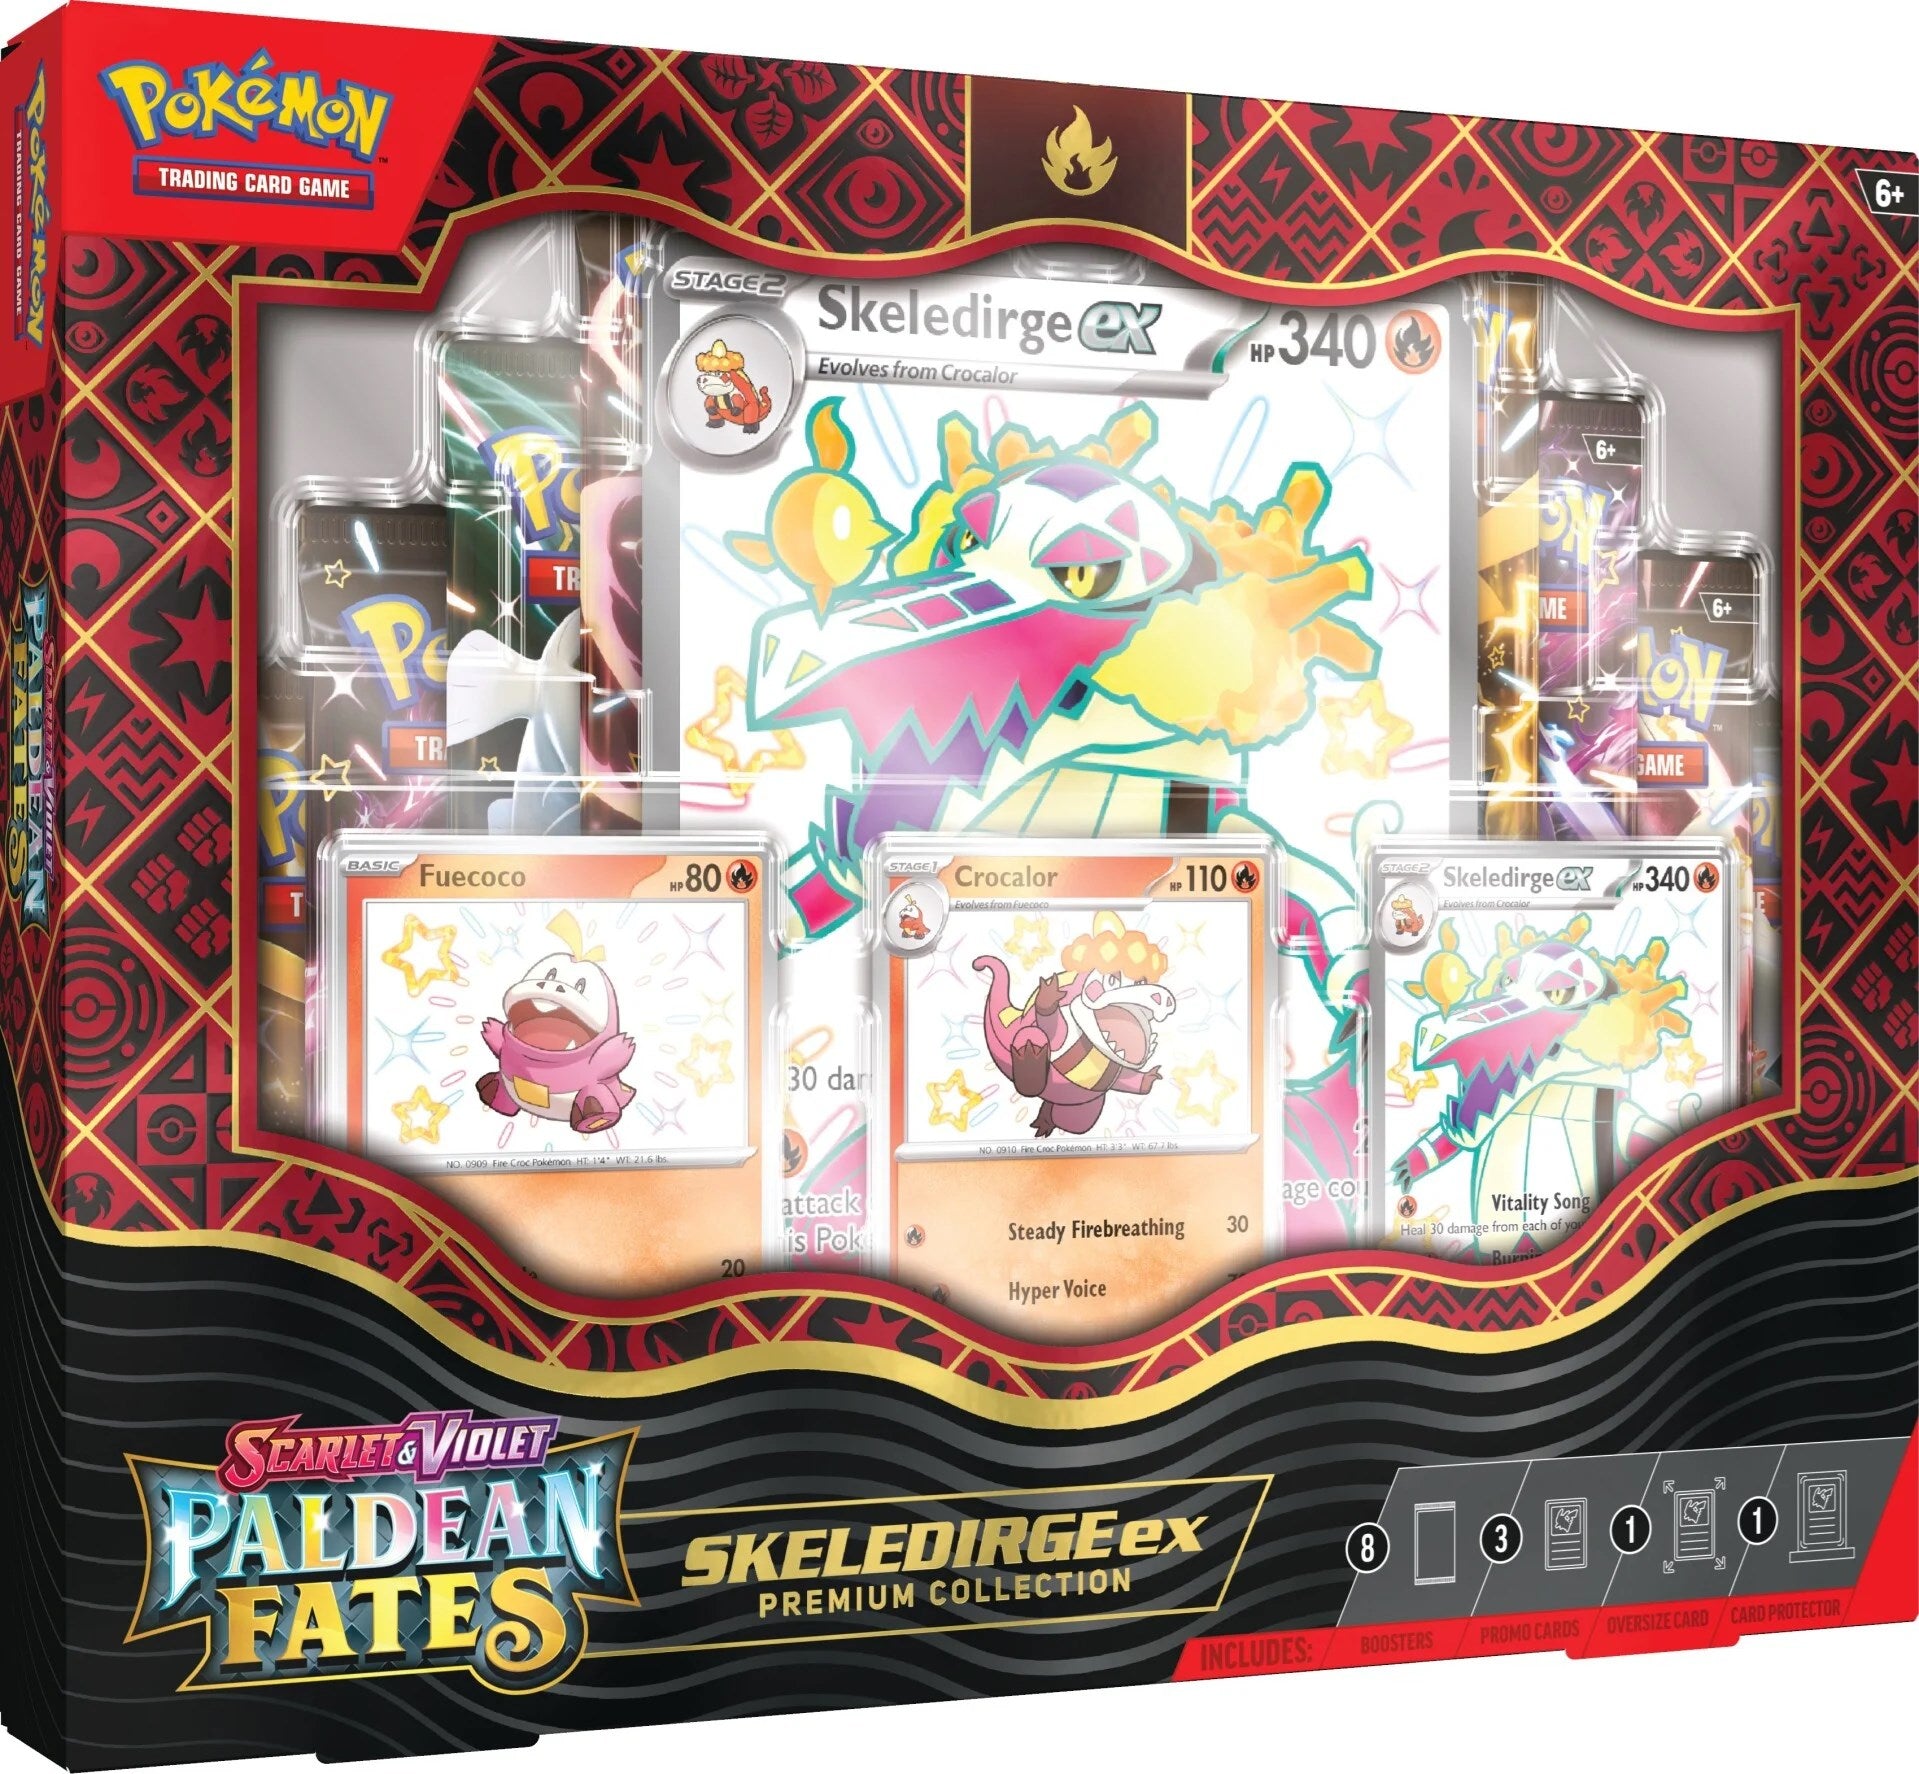 Pokémon Trading Card Game - Scarlet & Violet: Paldean Fates - Premium Collection (Skeledirge ex) | Viridian Forest